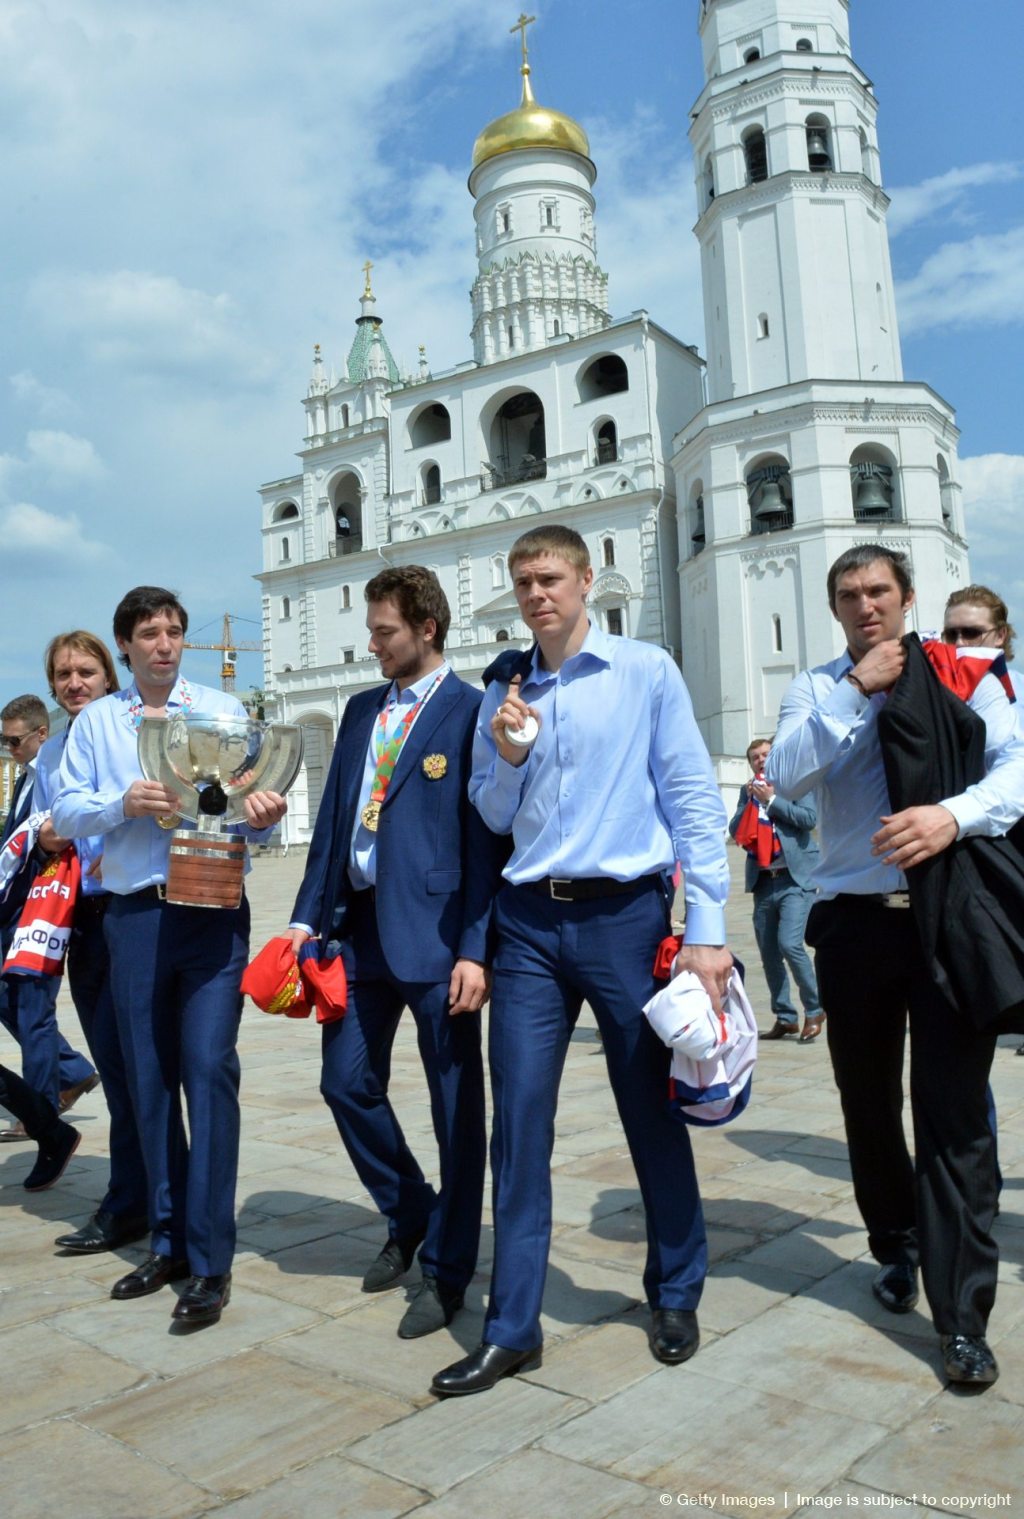 Хоккей в России: RUSSIA-POLITICS-IHOCKEY-WORLD-RUS